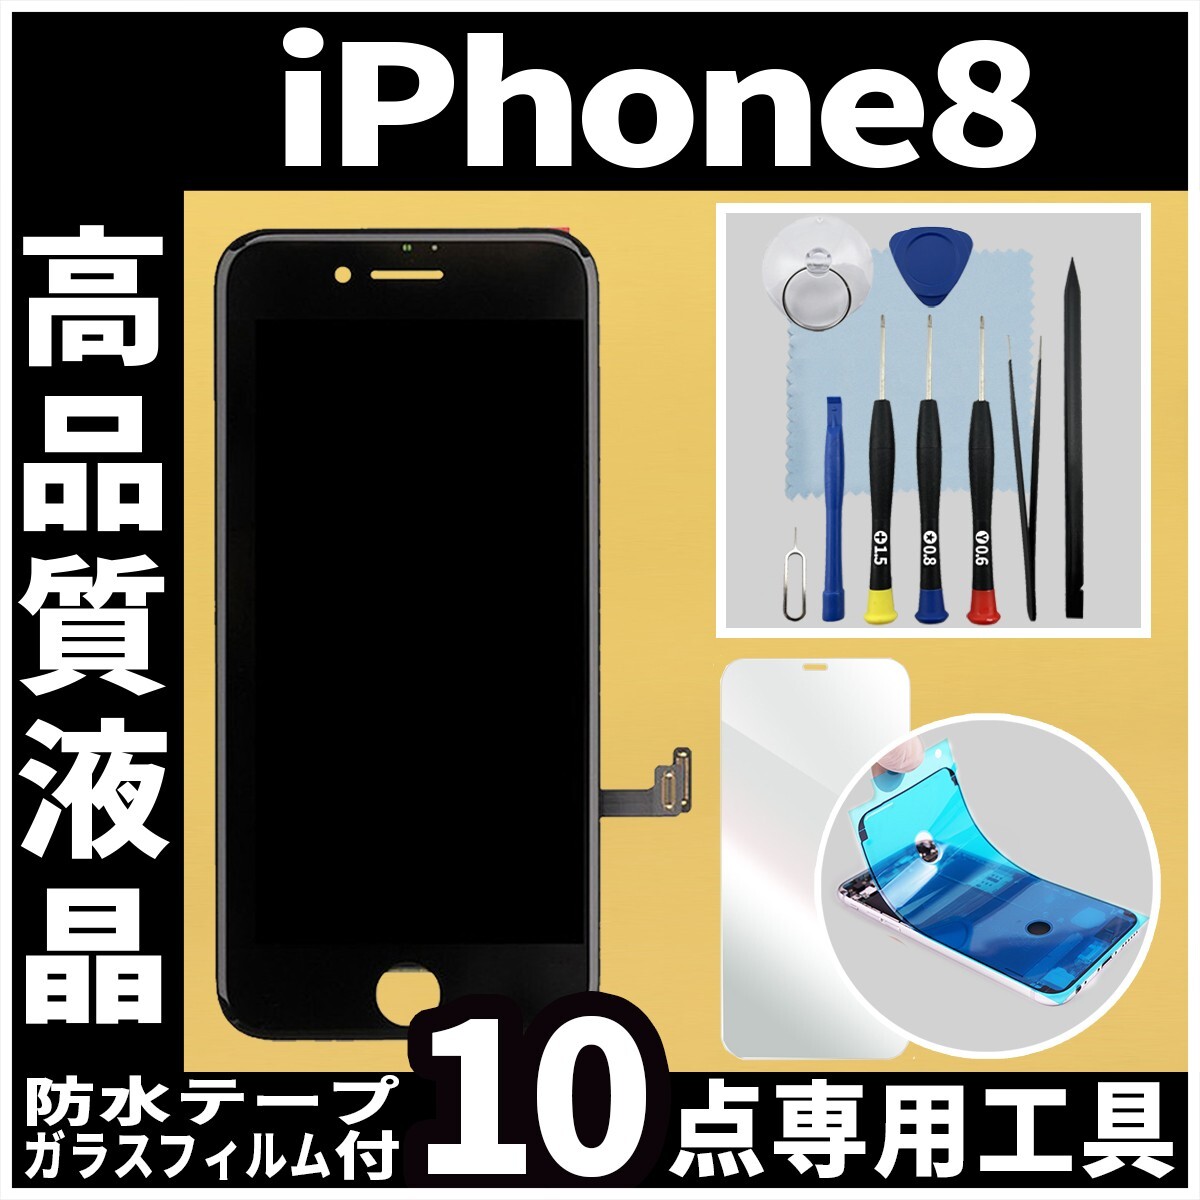 iPhone8 高品質液晶 フロントパネル 黒 高品質AAA 互換品 LCD 業者 画面割れ 液晶 iphone 修理 ガラス割れ 交換 防水テープ タッチの画像1